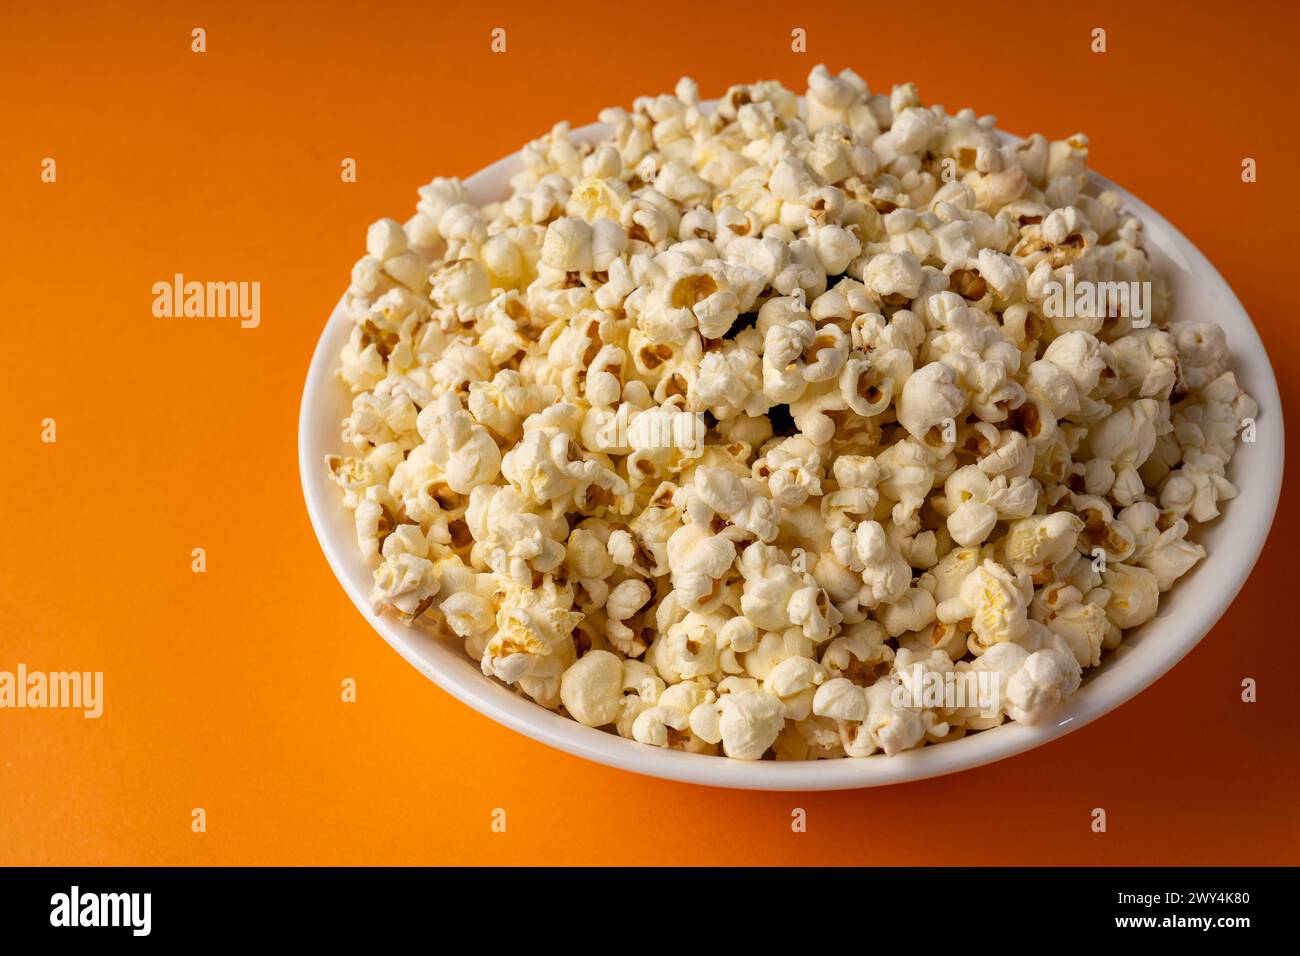 A white bowl of popcorn on an orange table. Stock Photo